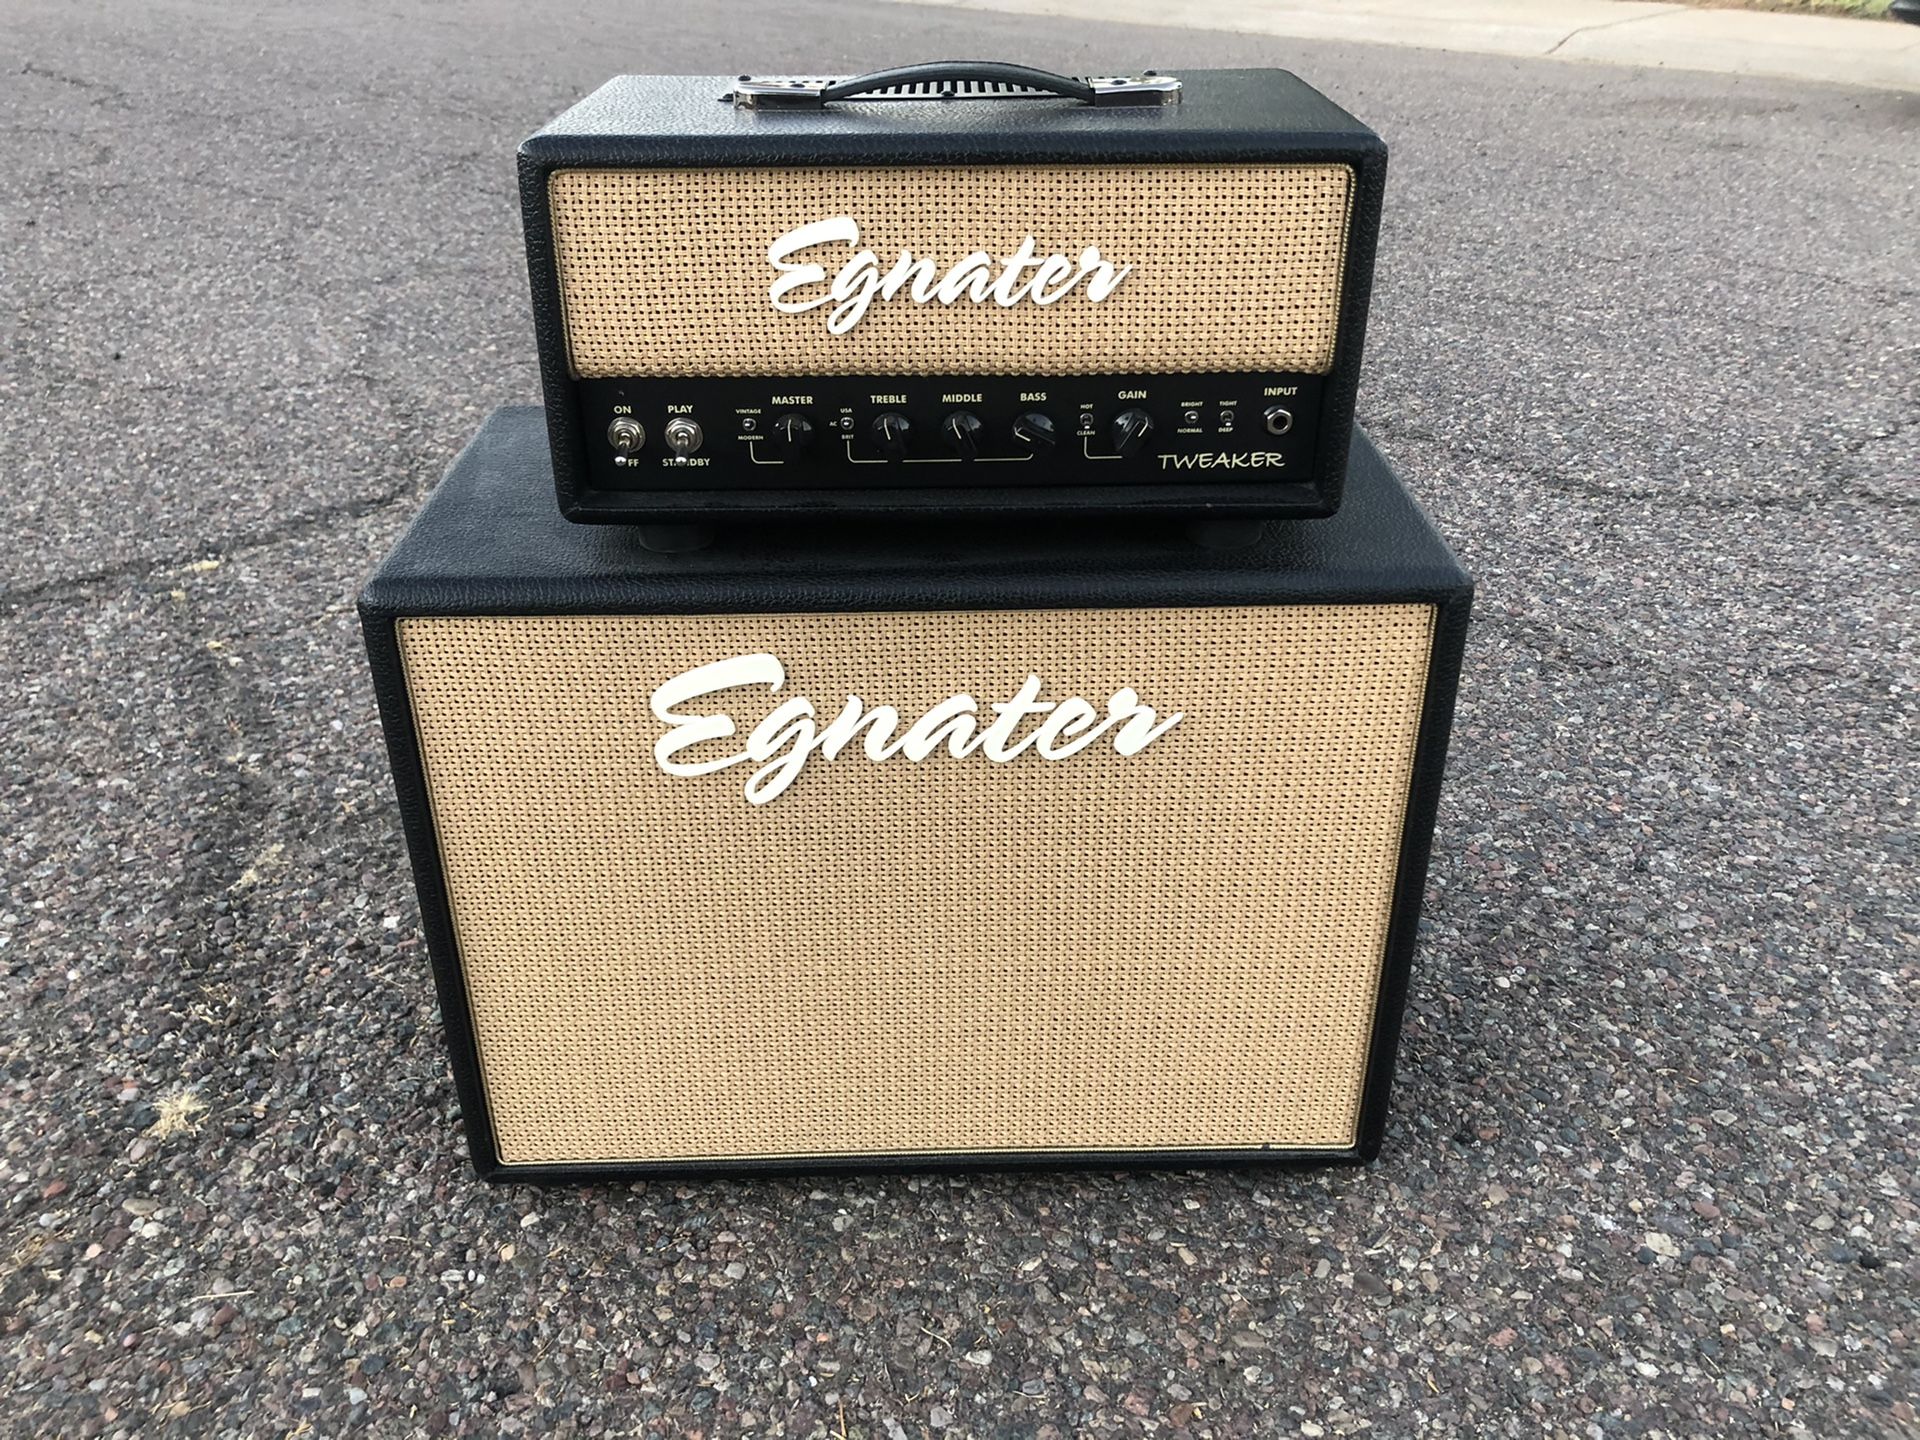 Egnater tweaker guitar and tube amplifier